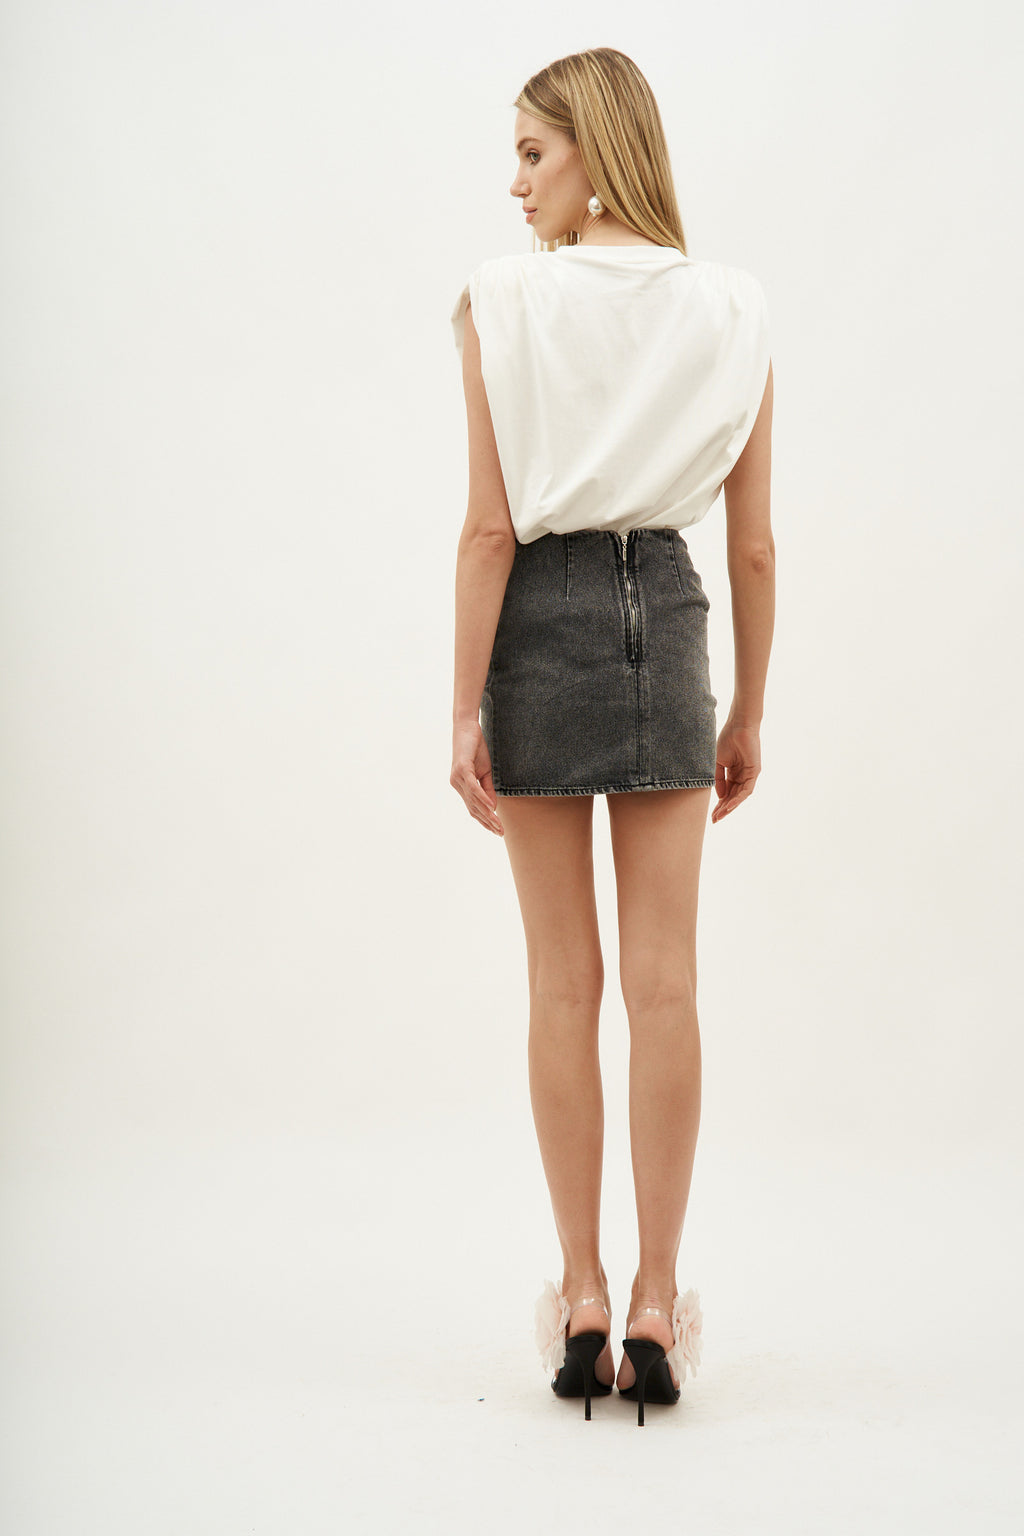 Wishaw Grey Skirt